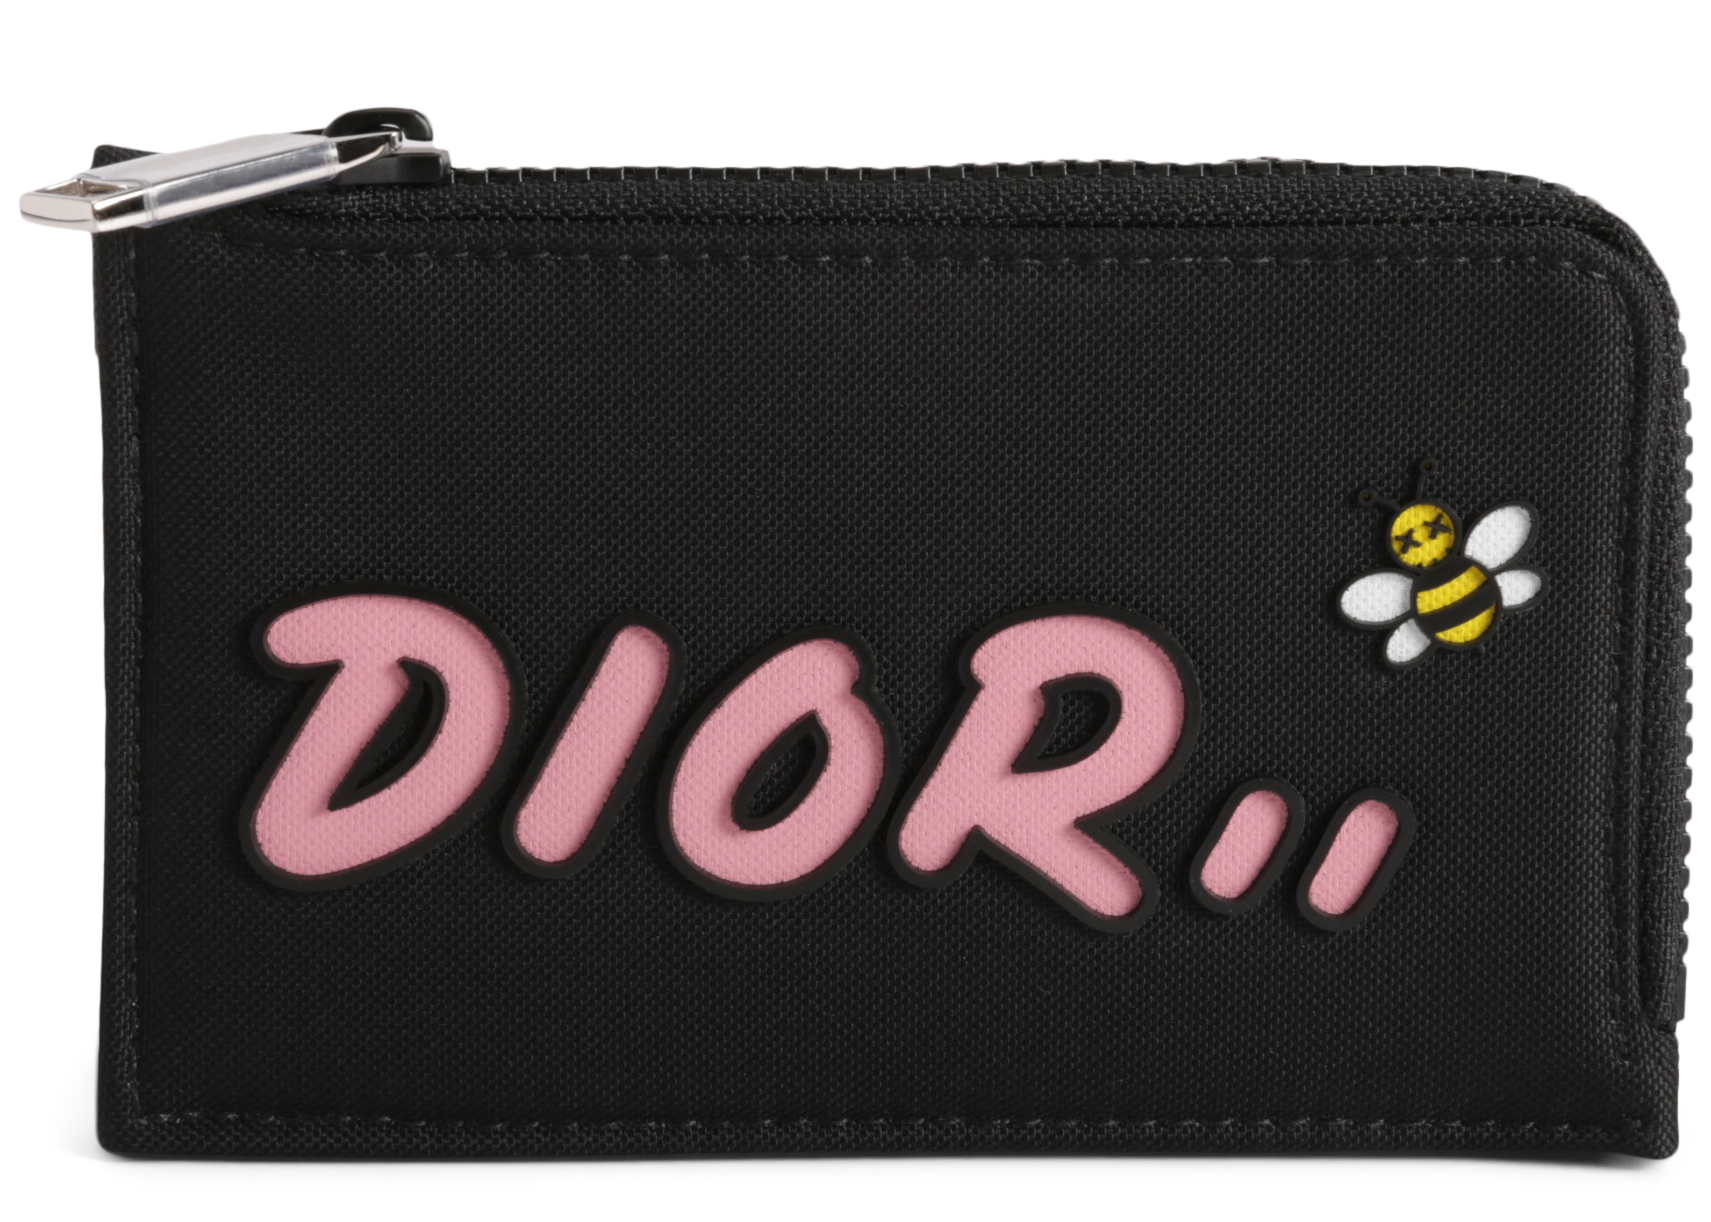 dior x kaws black nylon pouch with pink dior logo